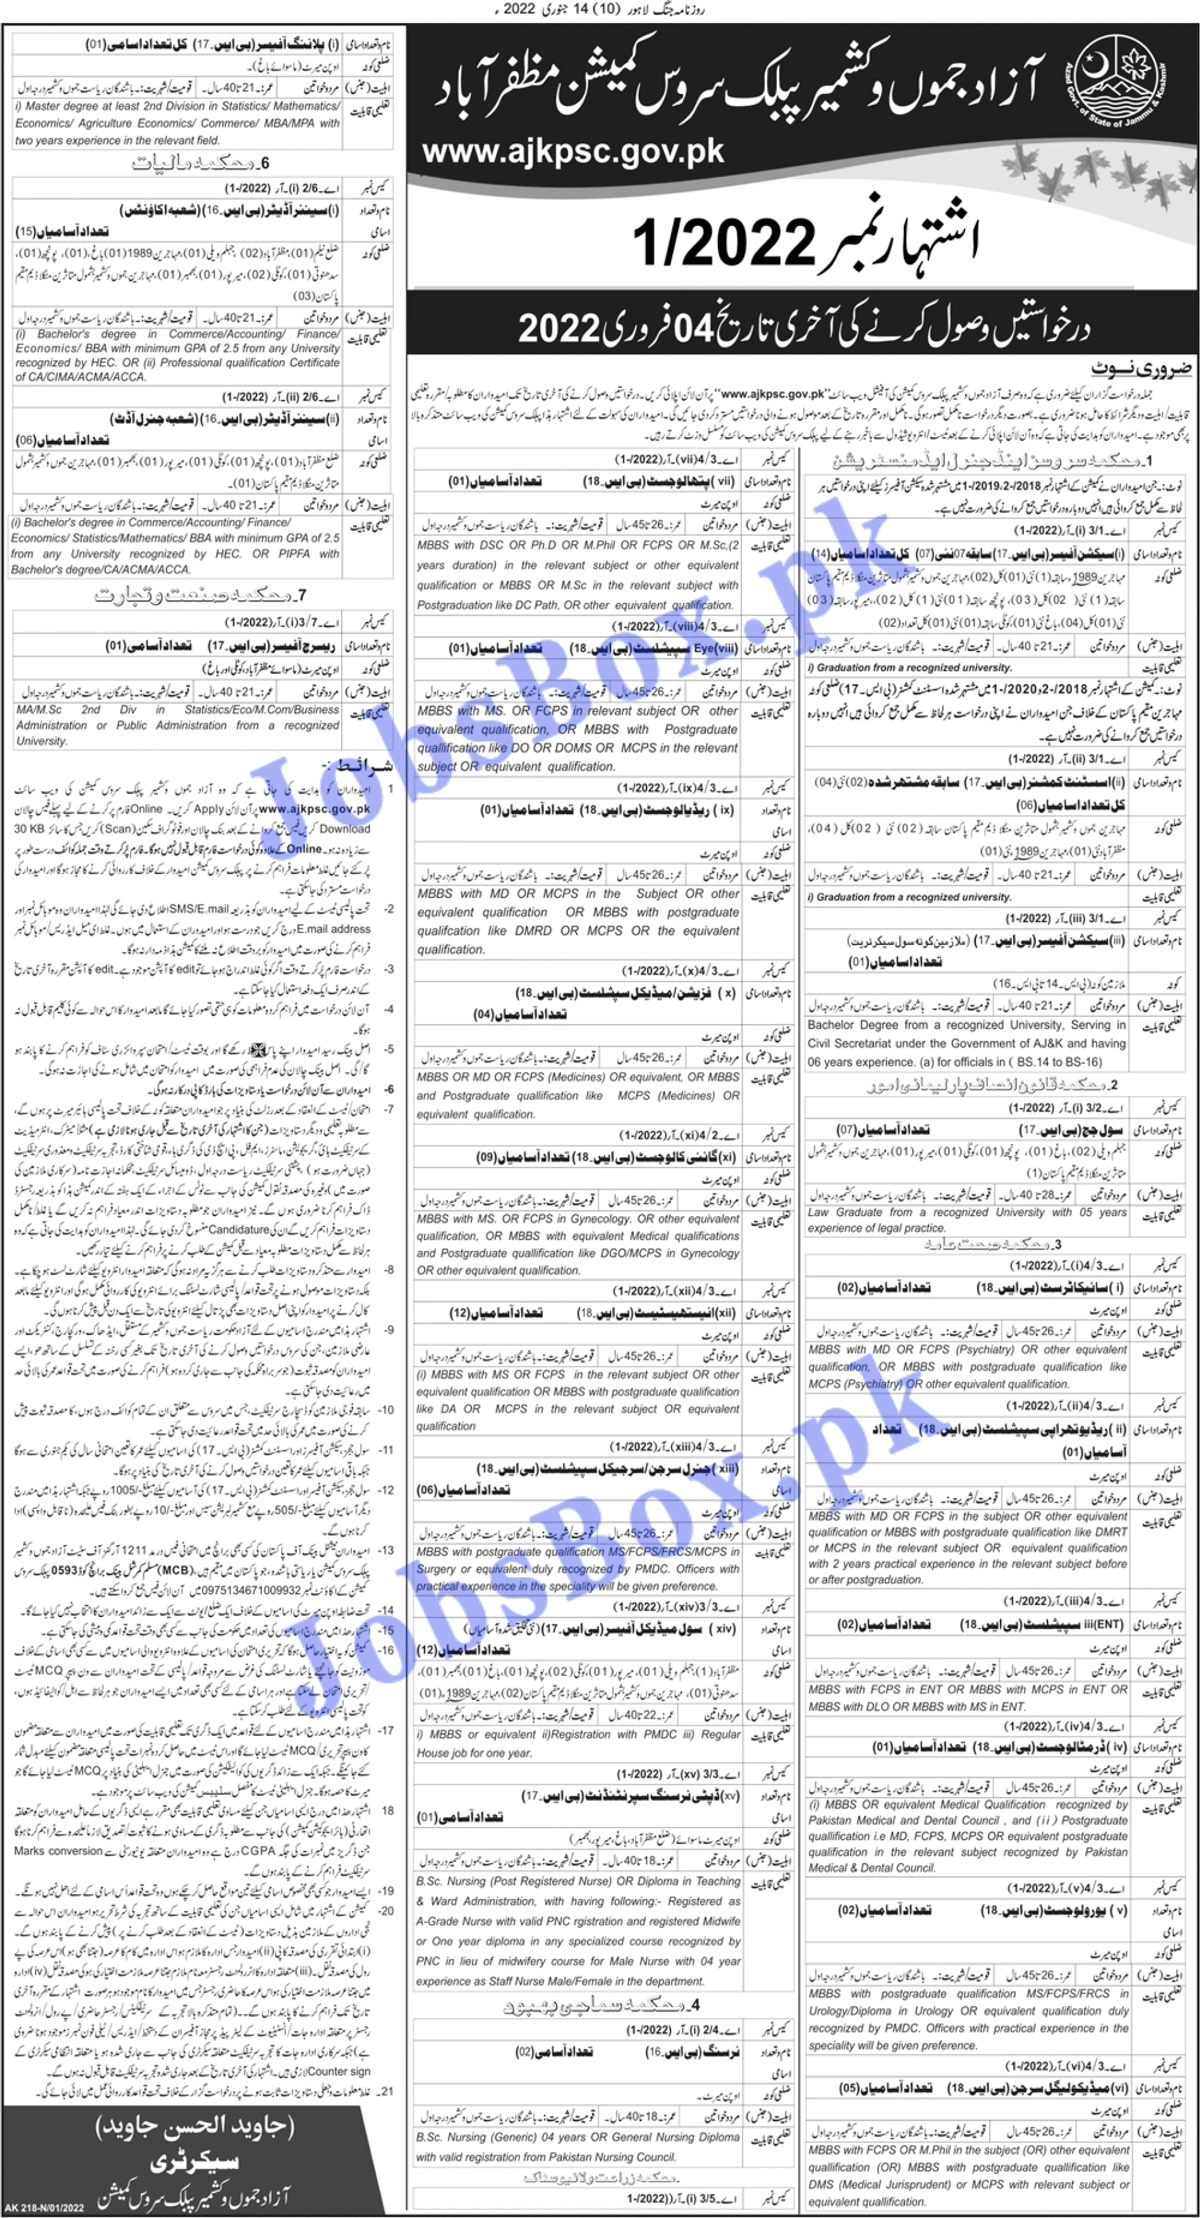 AJK Public Service Commission AJKPSC Jobs 2022 - www.ajkpsc.gov.pk